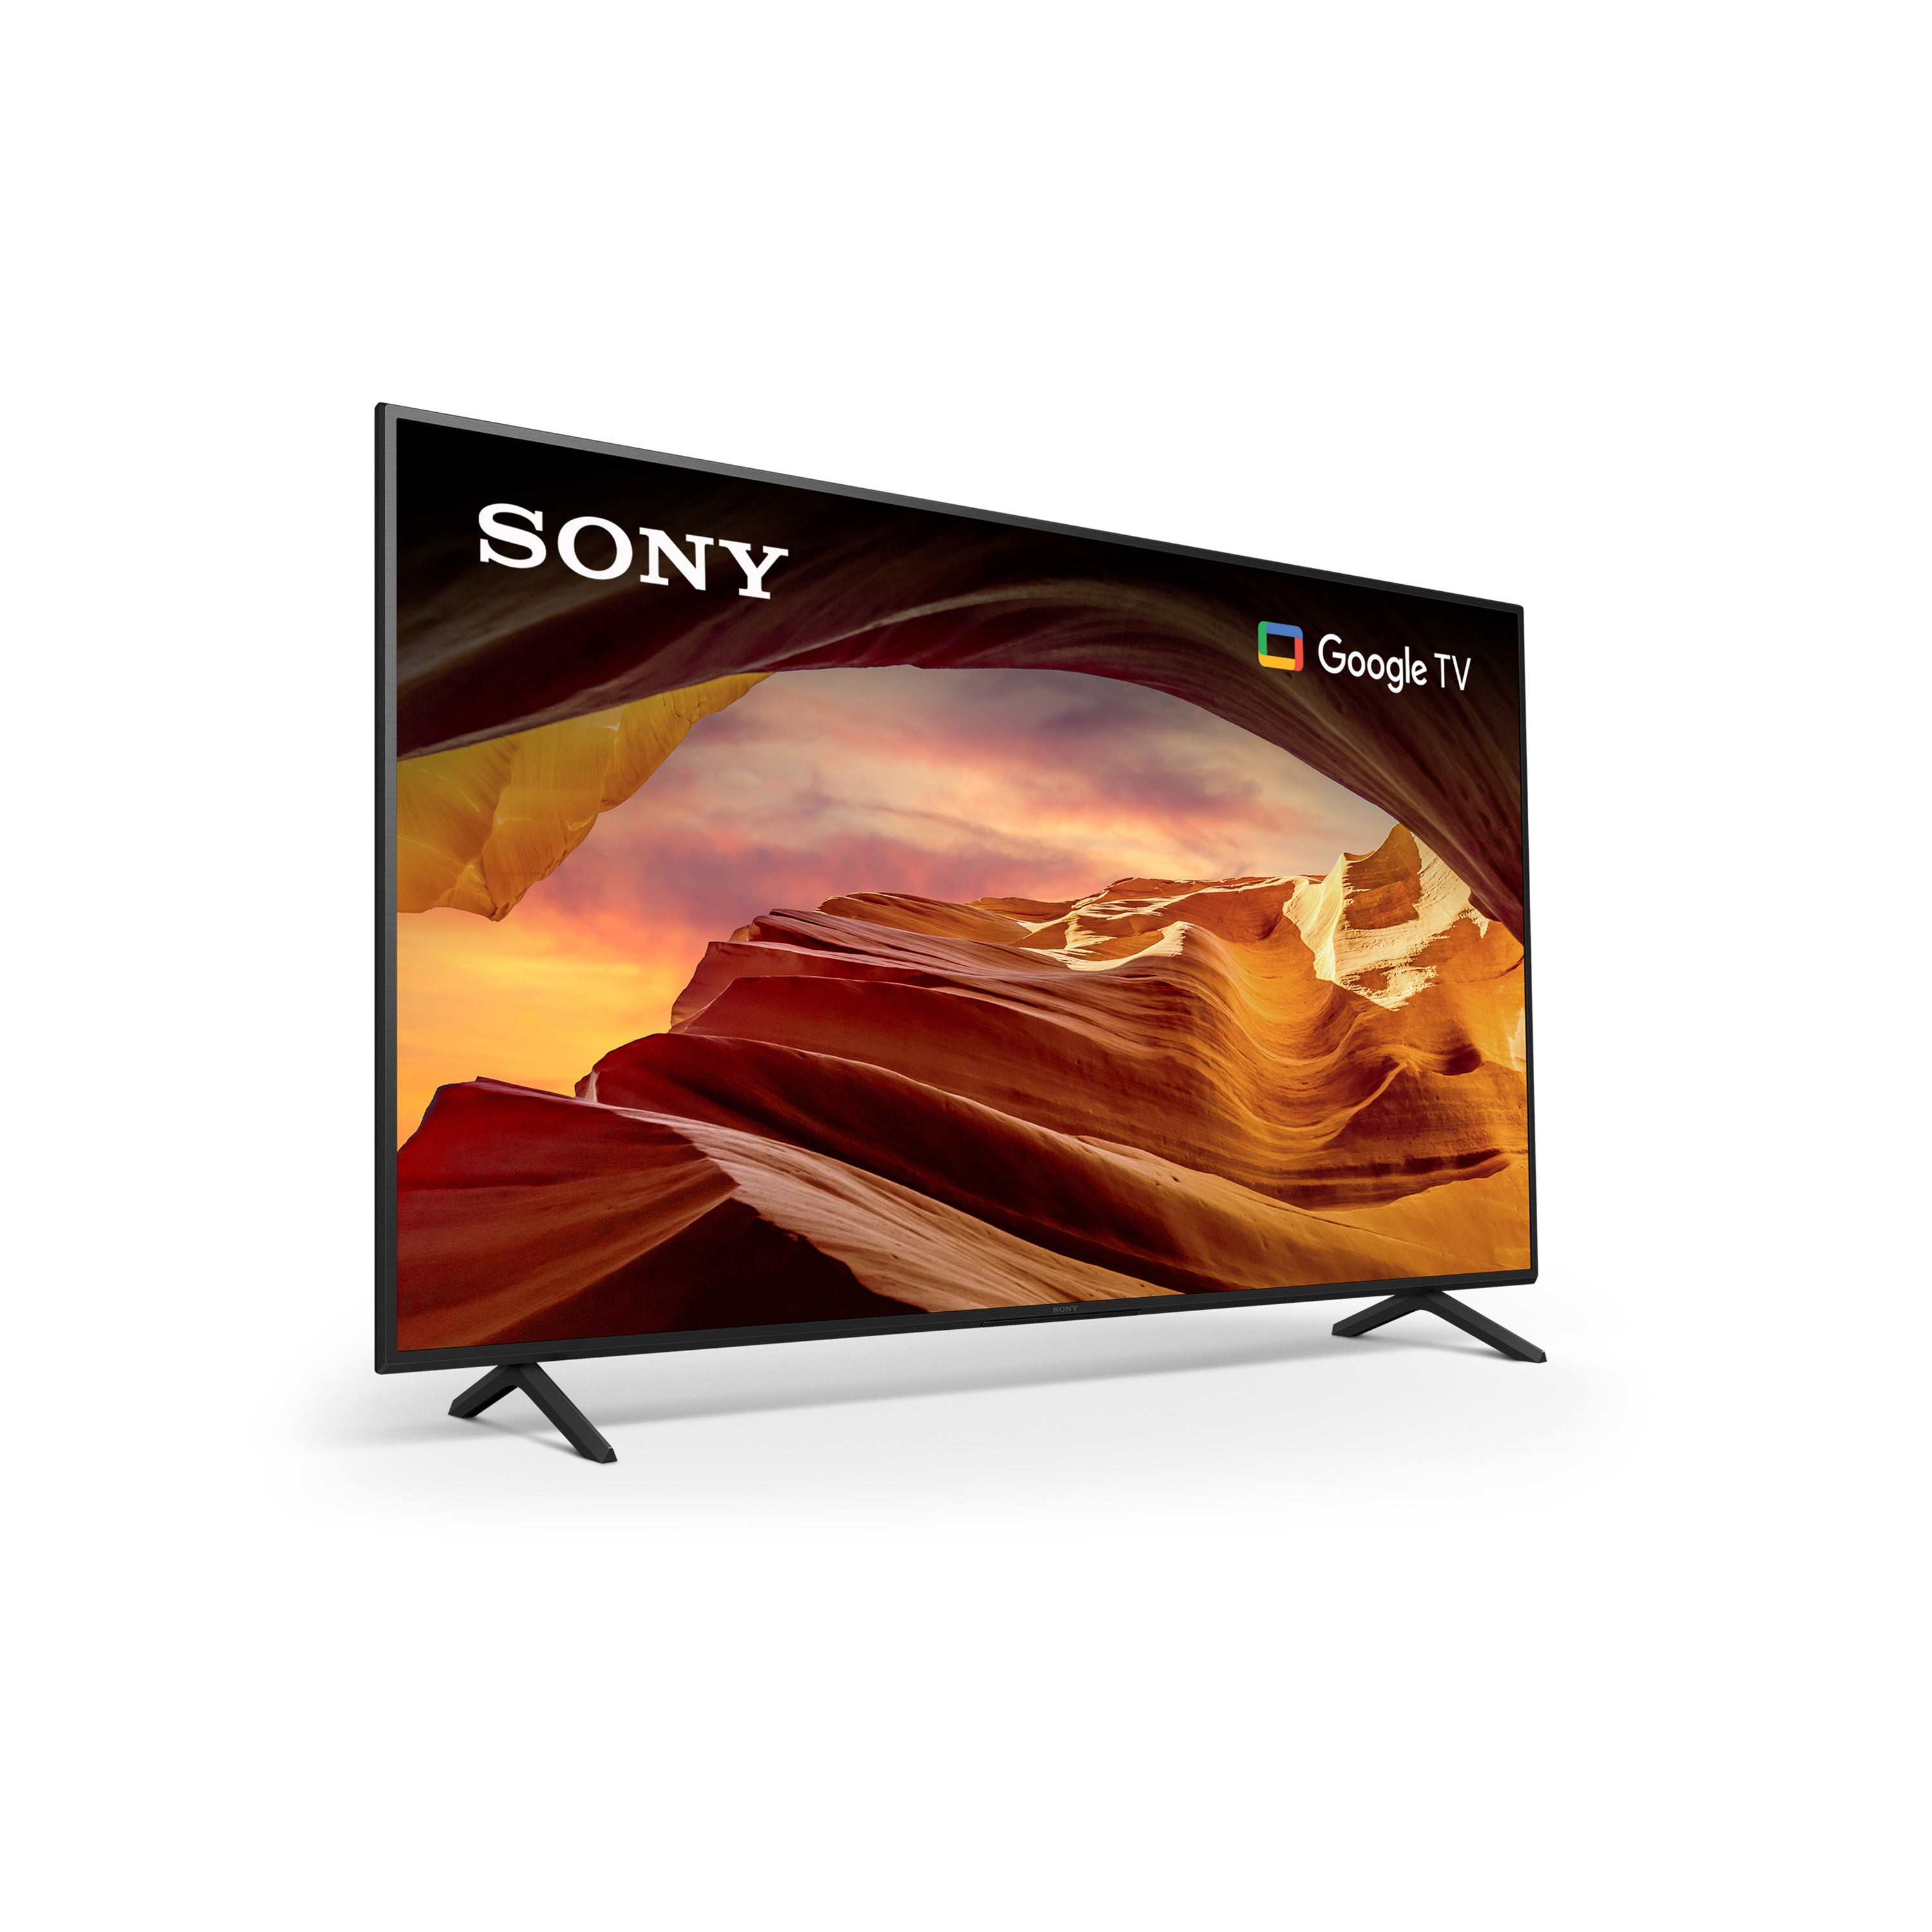 Sony X77L LED 4K TV | Smart (Google TV) — The Sony